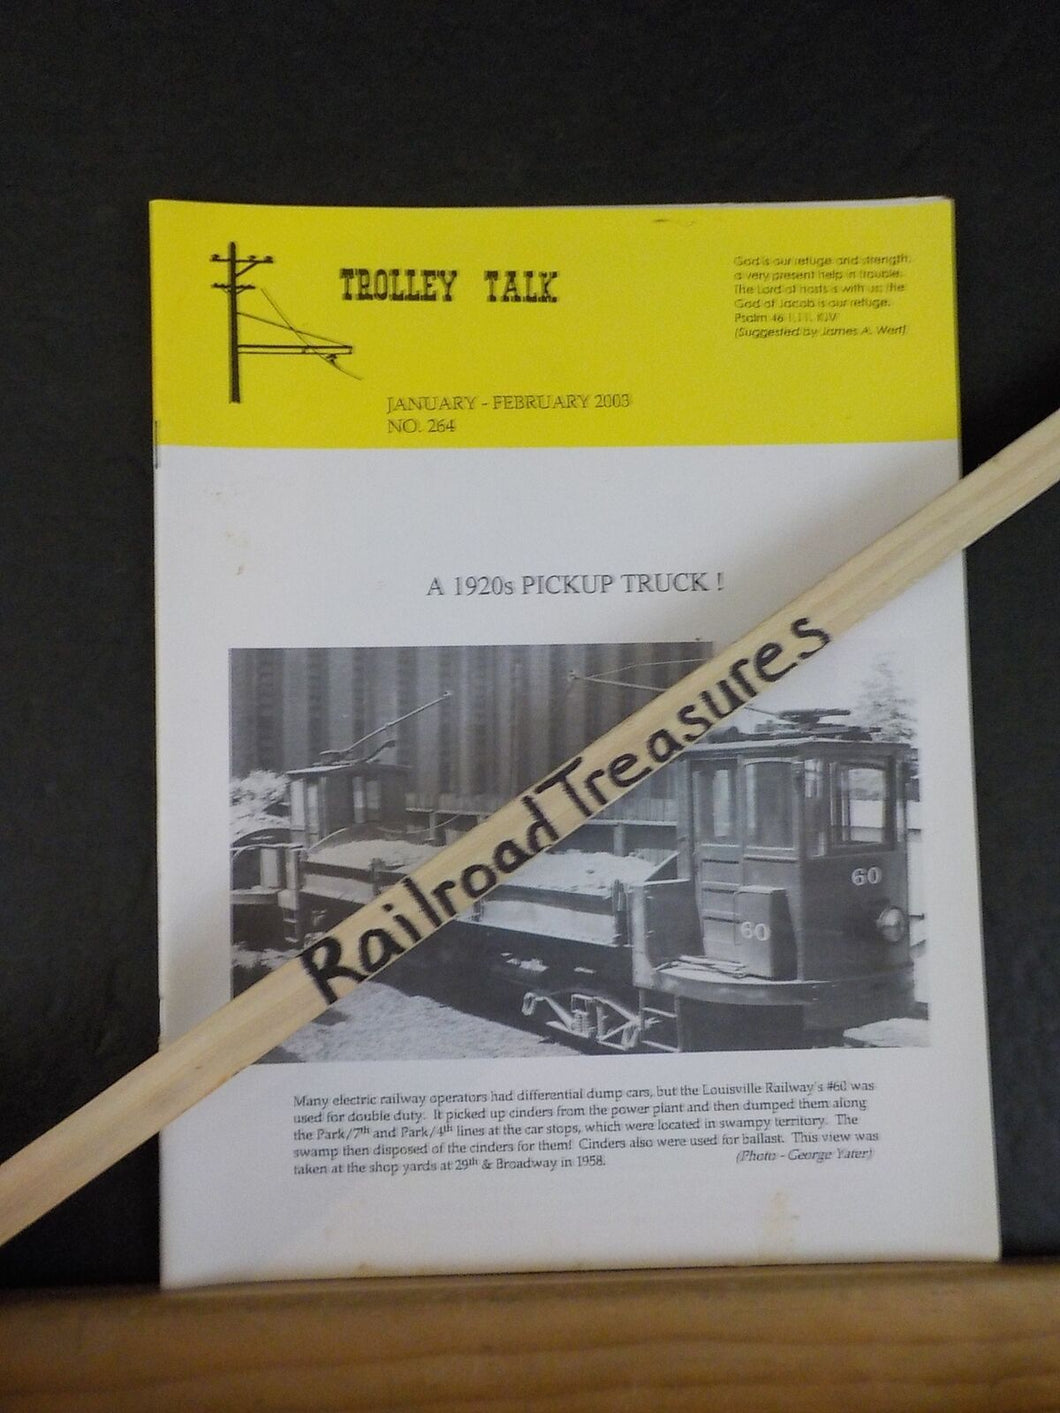 Trolley Talk #264 2003 January February 1920s Pickup Truck. Lehigh Valley